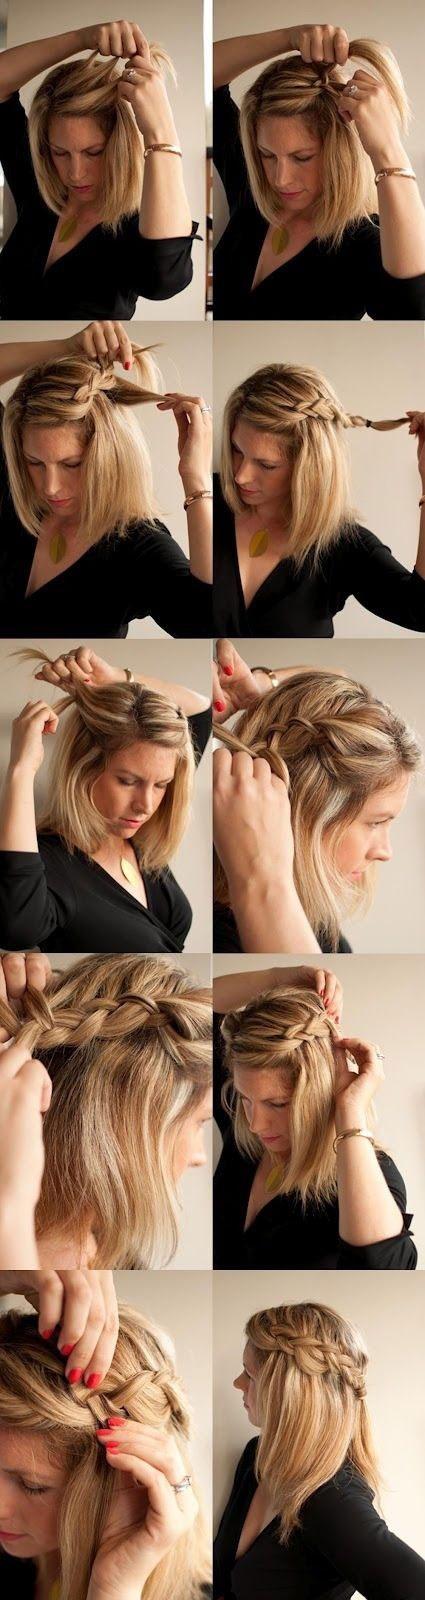 Simple easy hairstyles for medium length hair simple-easy-hairstyles-for-medium-length-hair-64_3